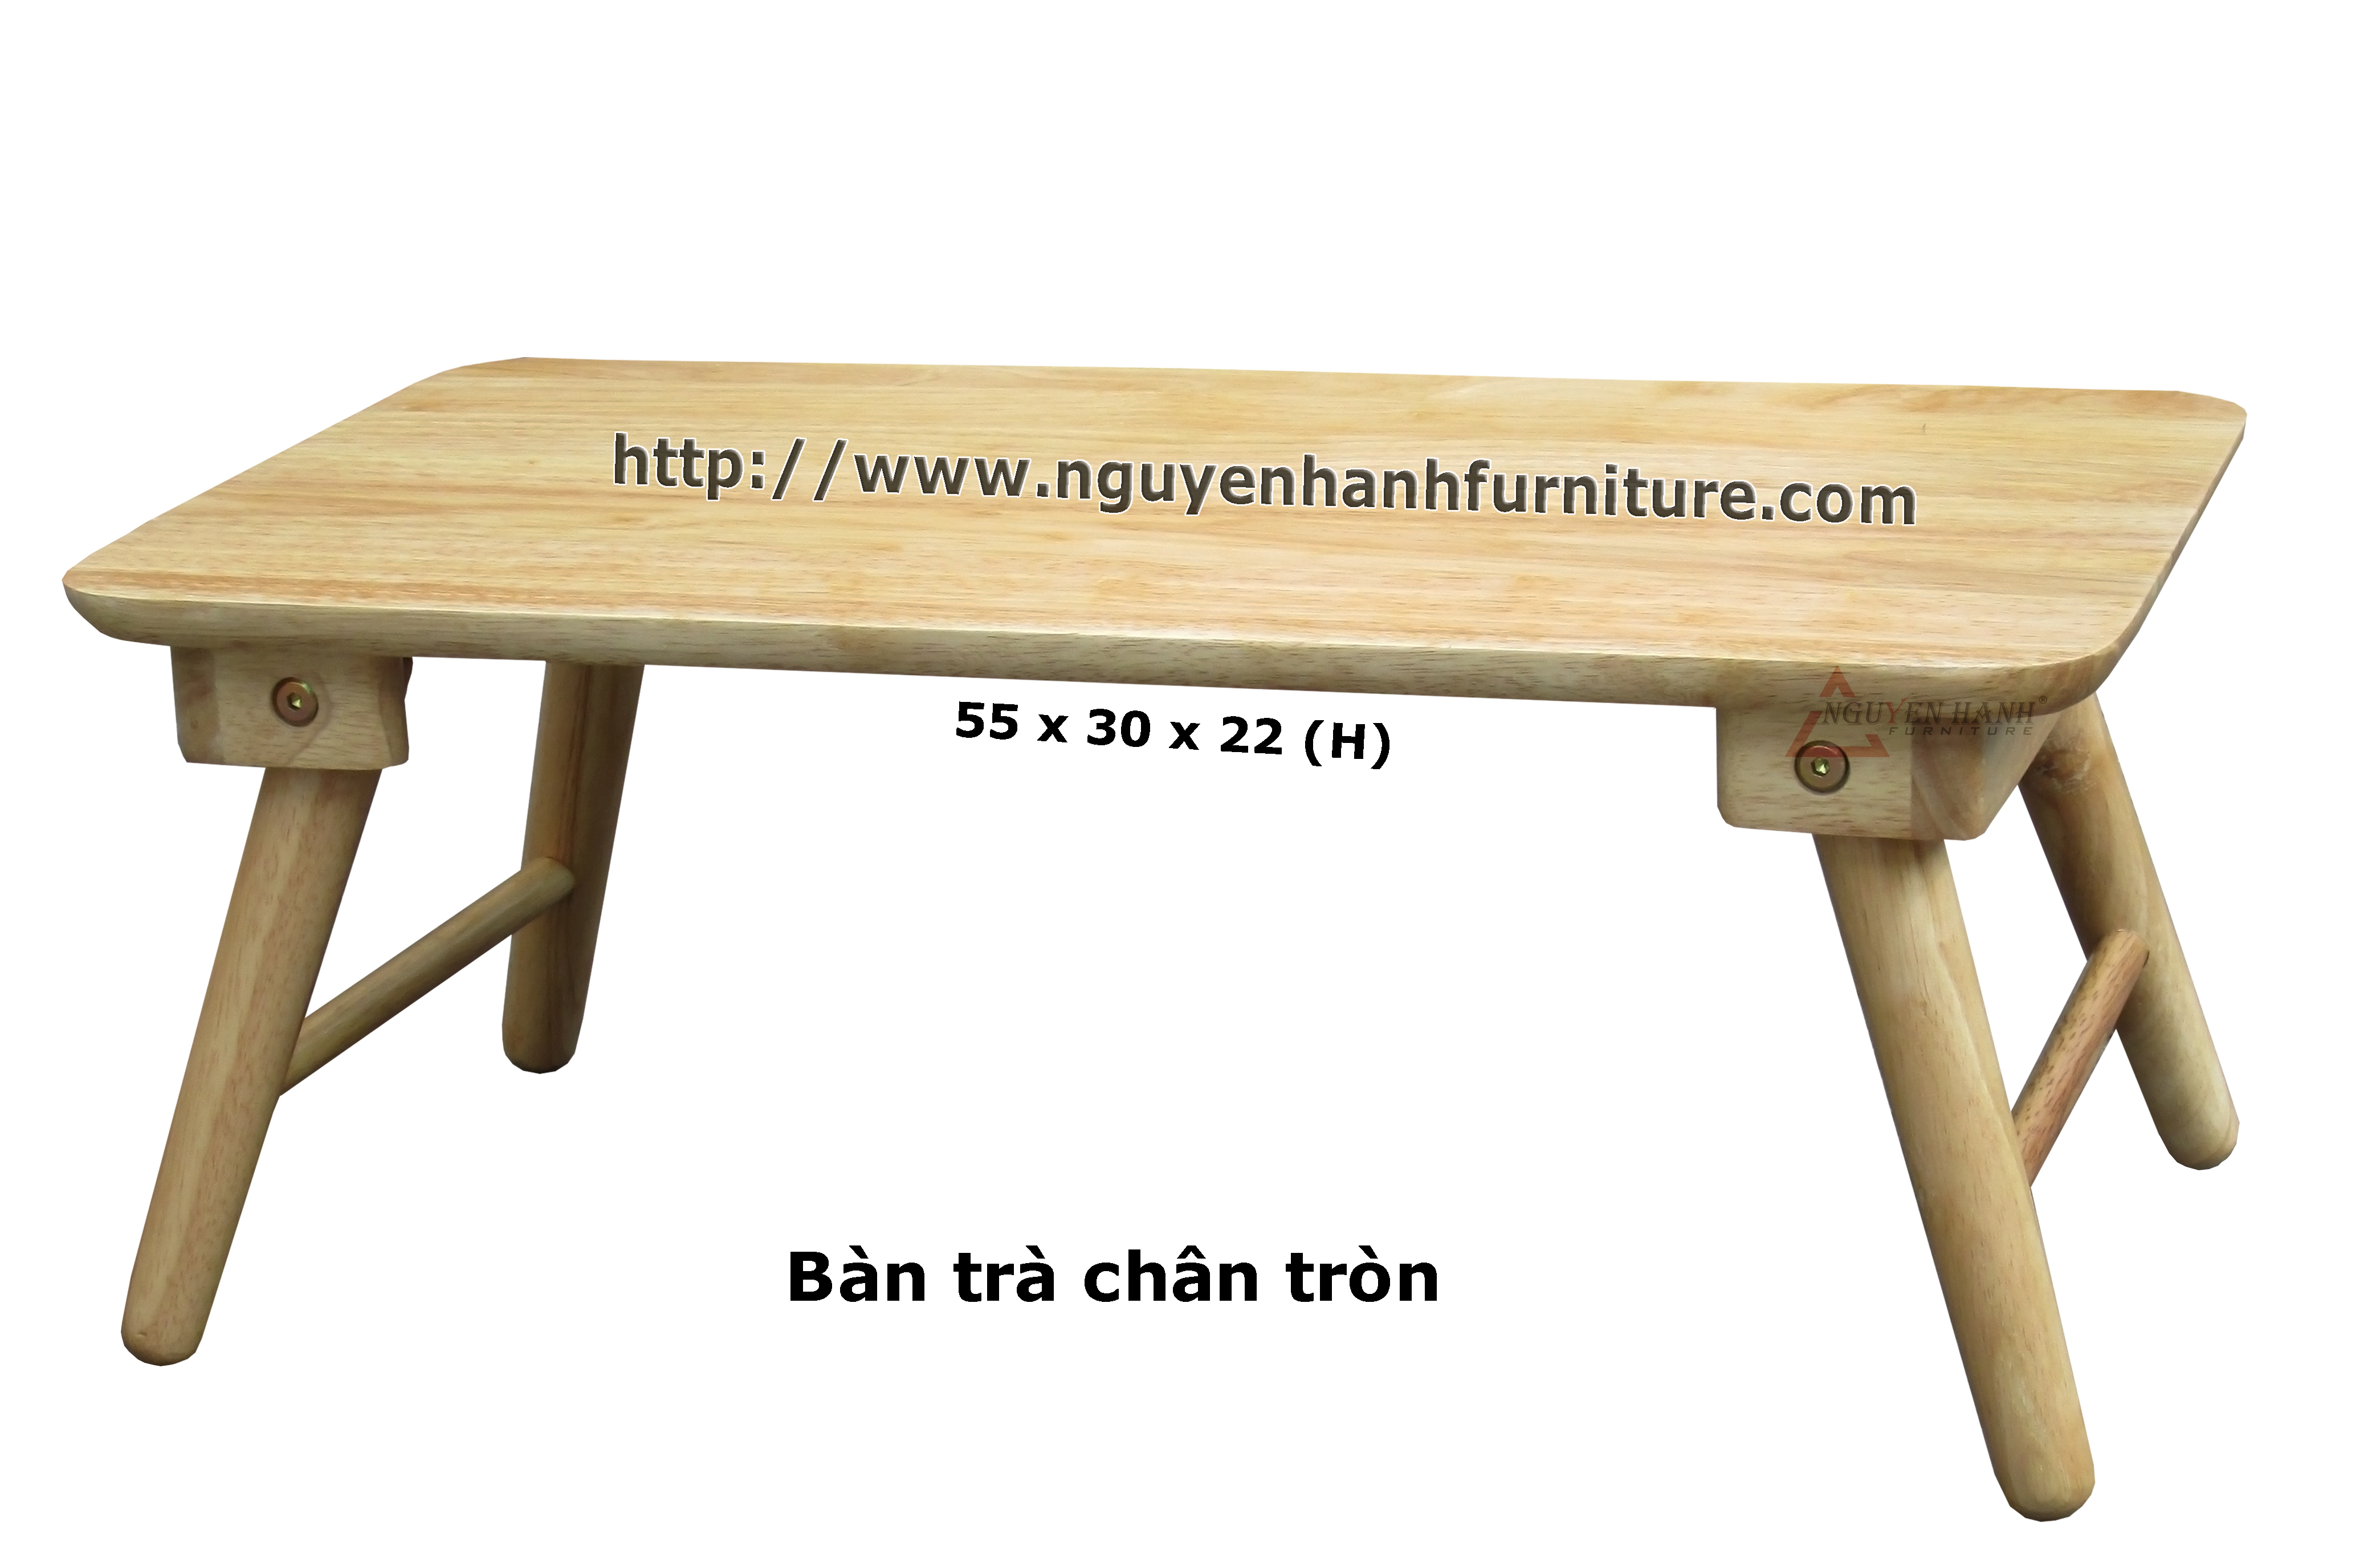 Name product: Round tea table leg (Natural) - Dimensions: 50 x 30 x 22 (H) - Description: Wood natural rubber